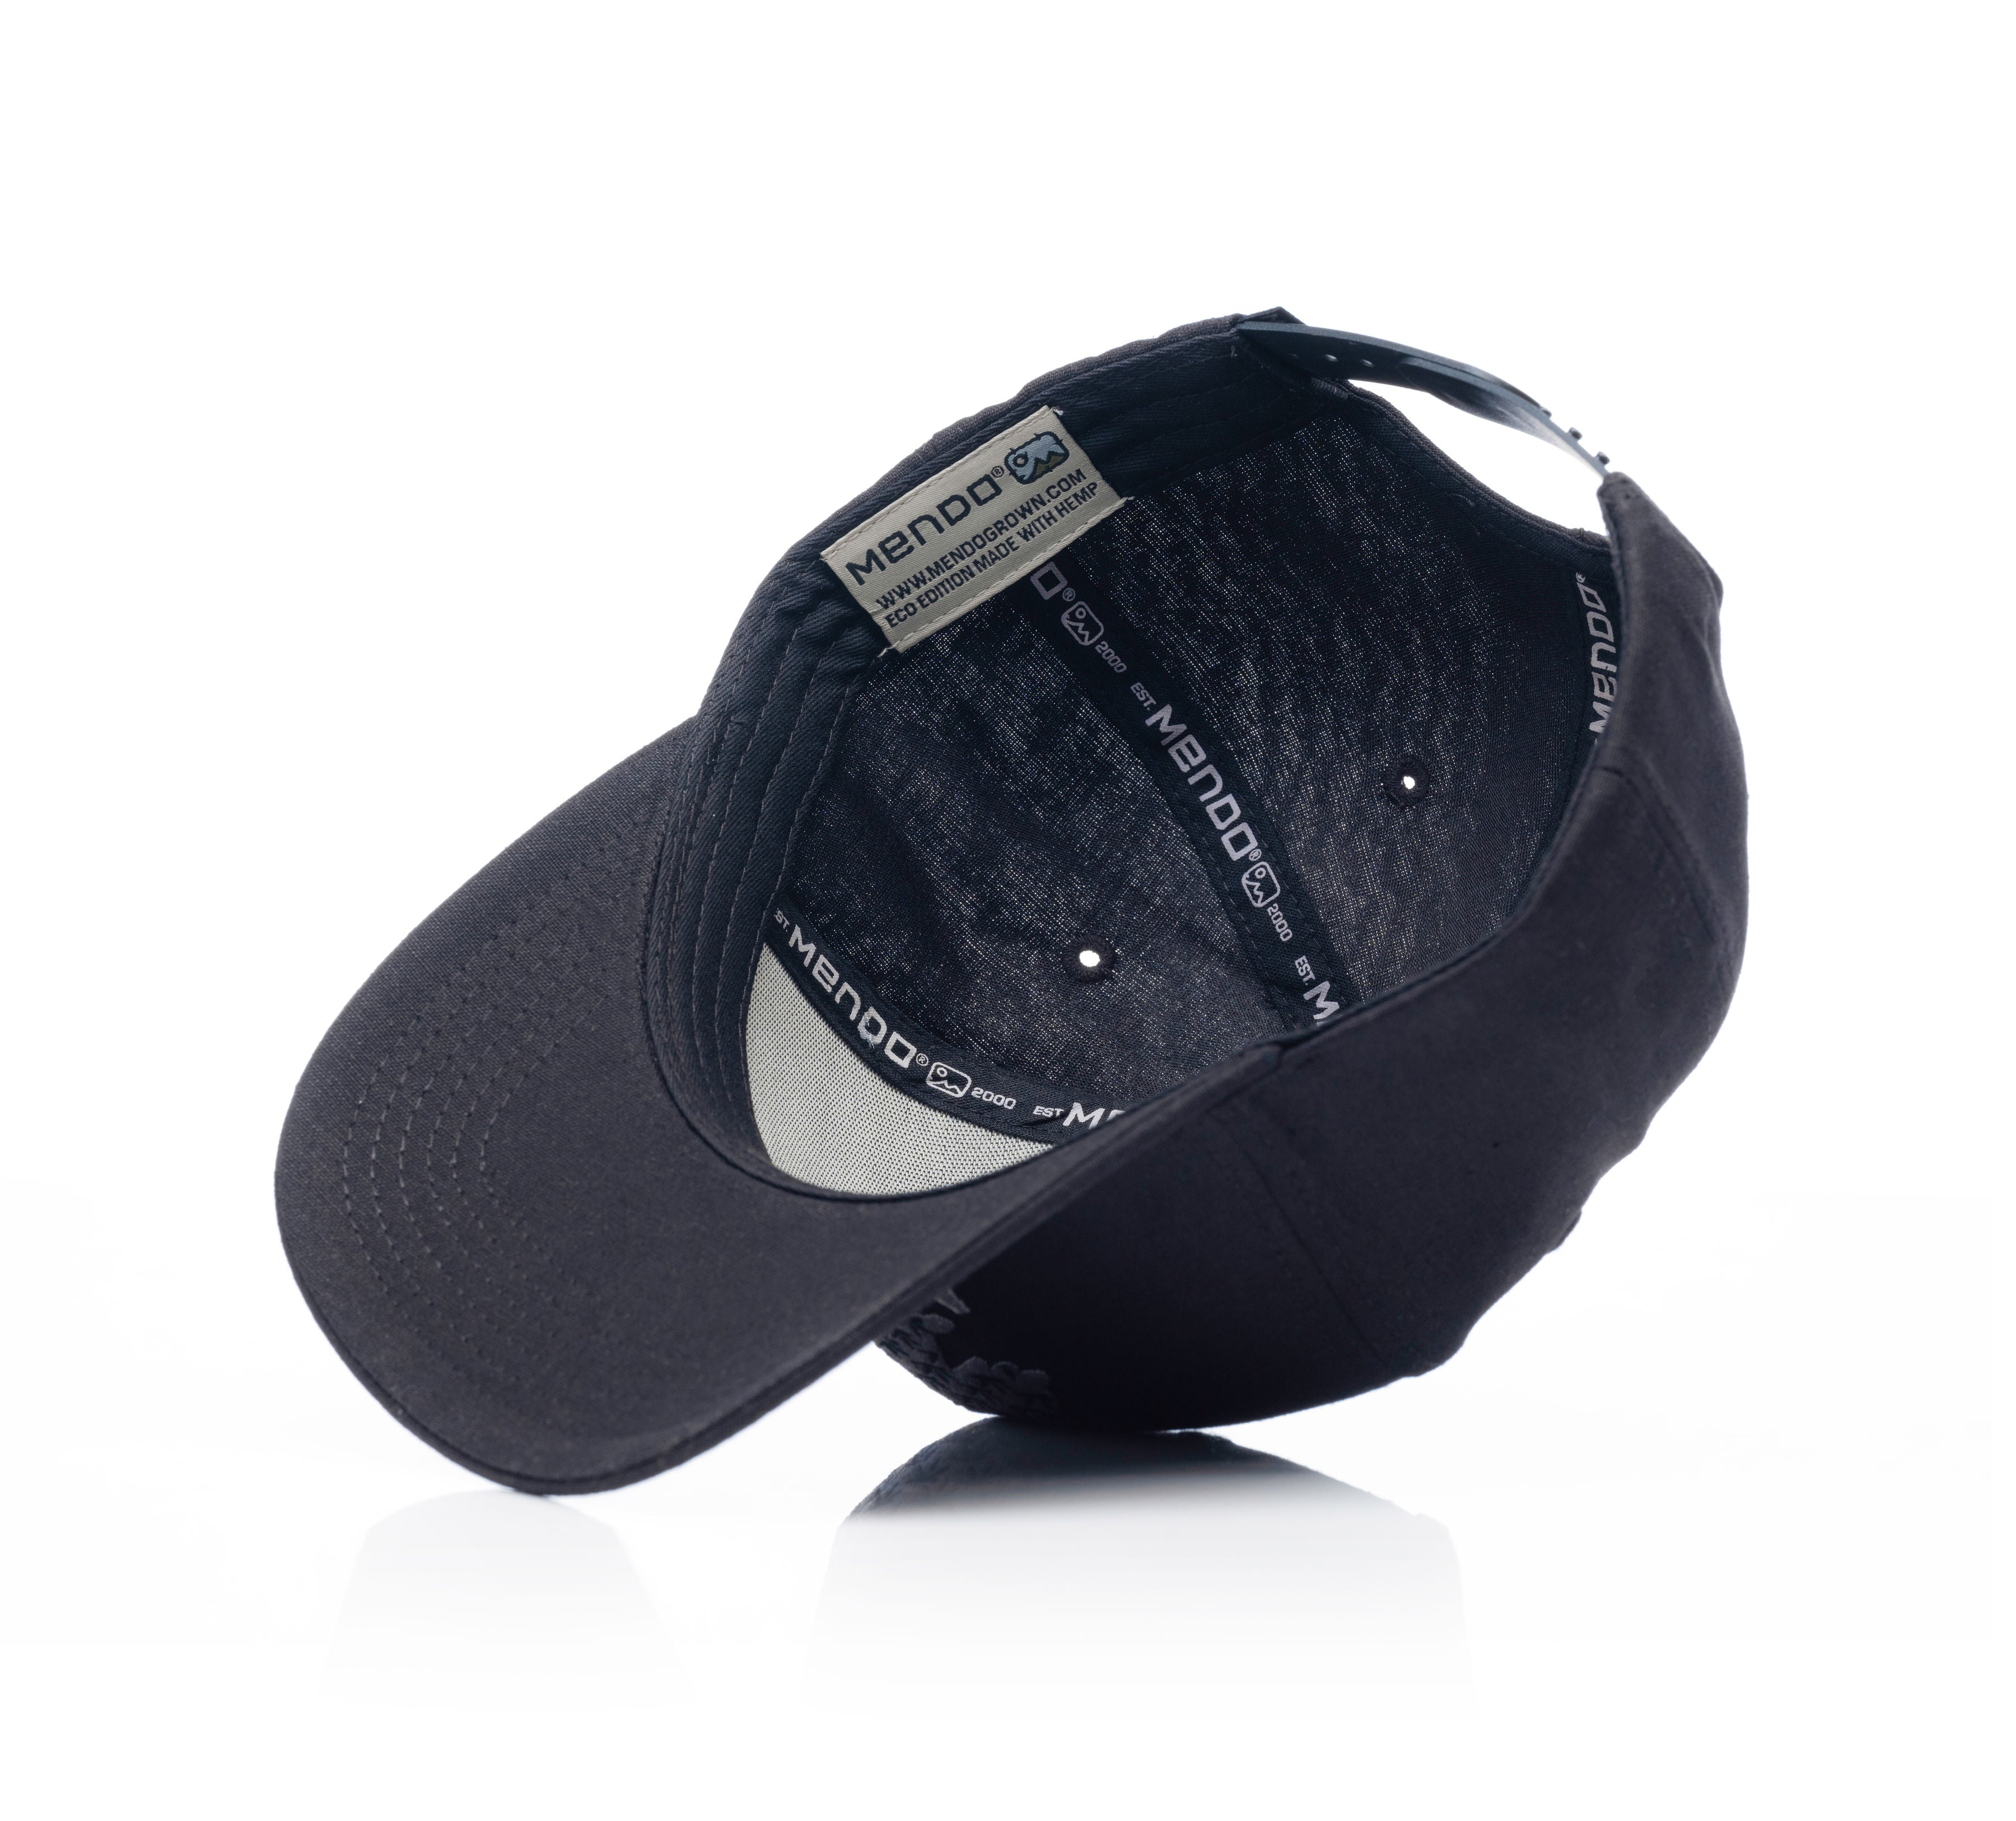 Mendo Eco Hemp Hat Black Cannabear